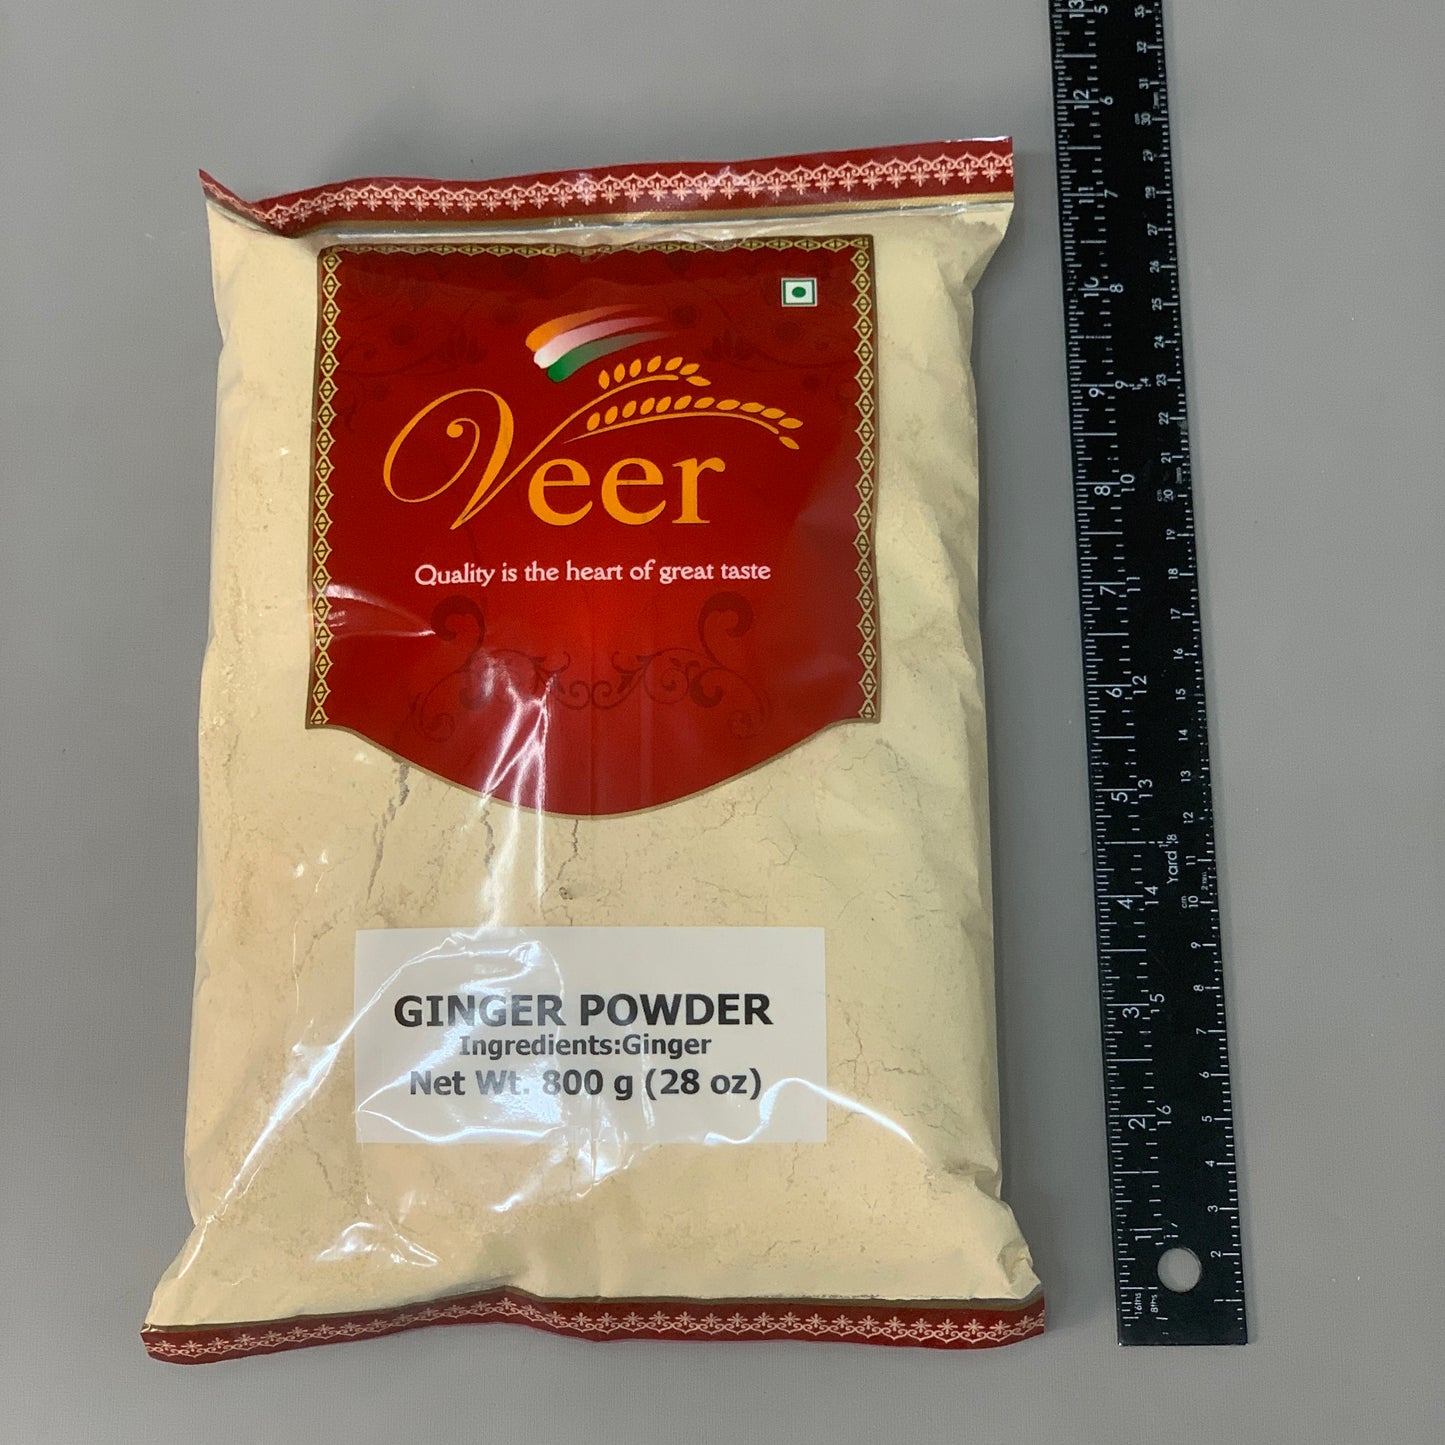 NEW INDIA BAZAR Veer 16 PK of Ginger Powder 28 oz (07/24)